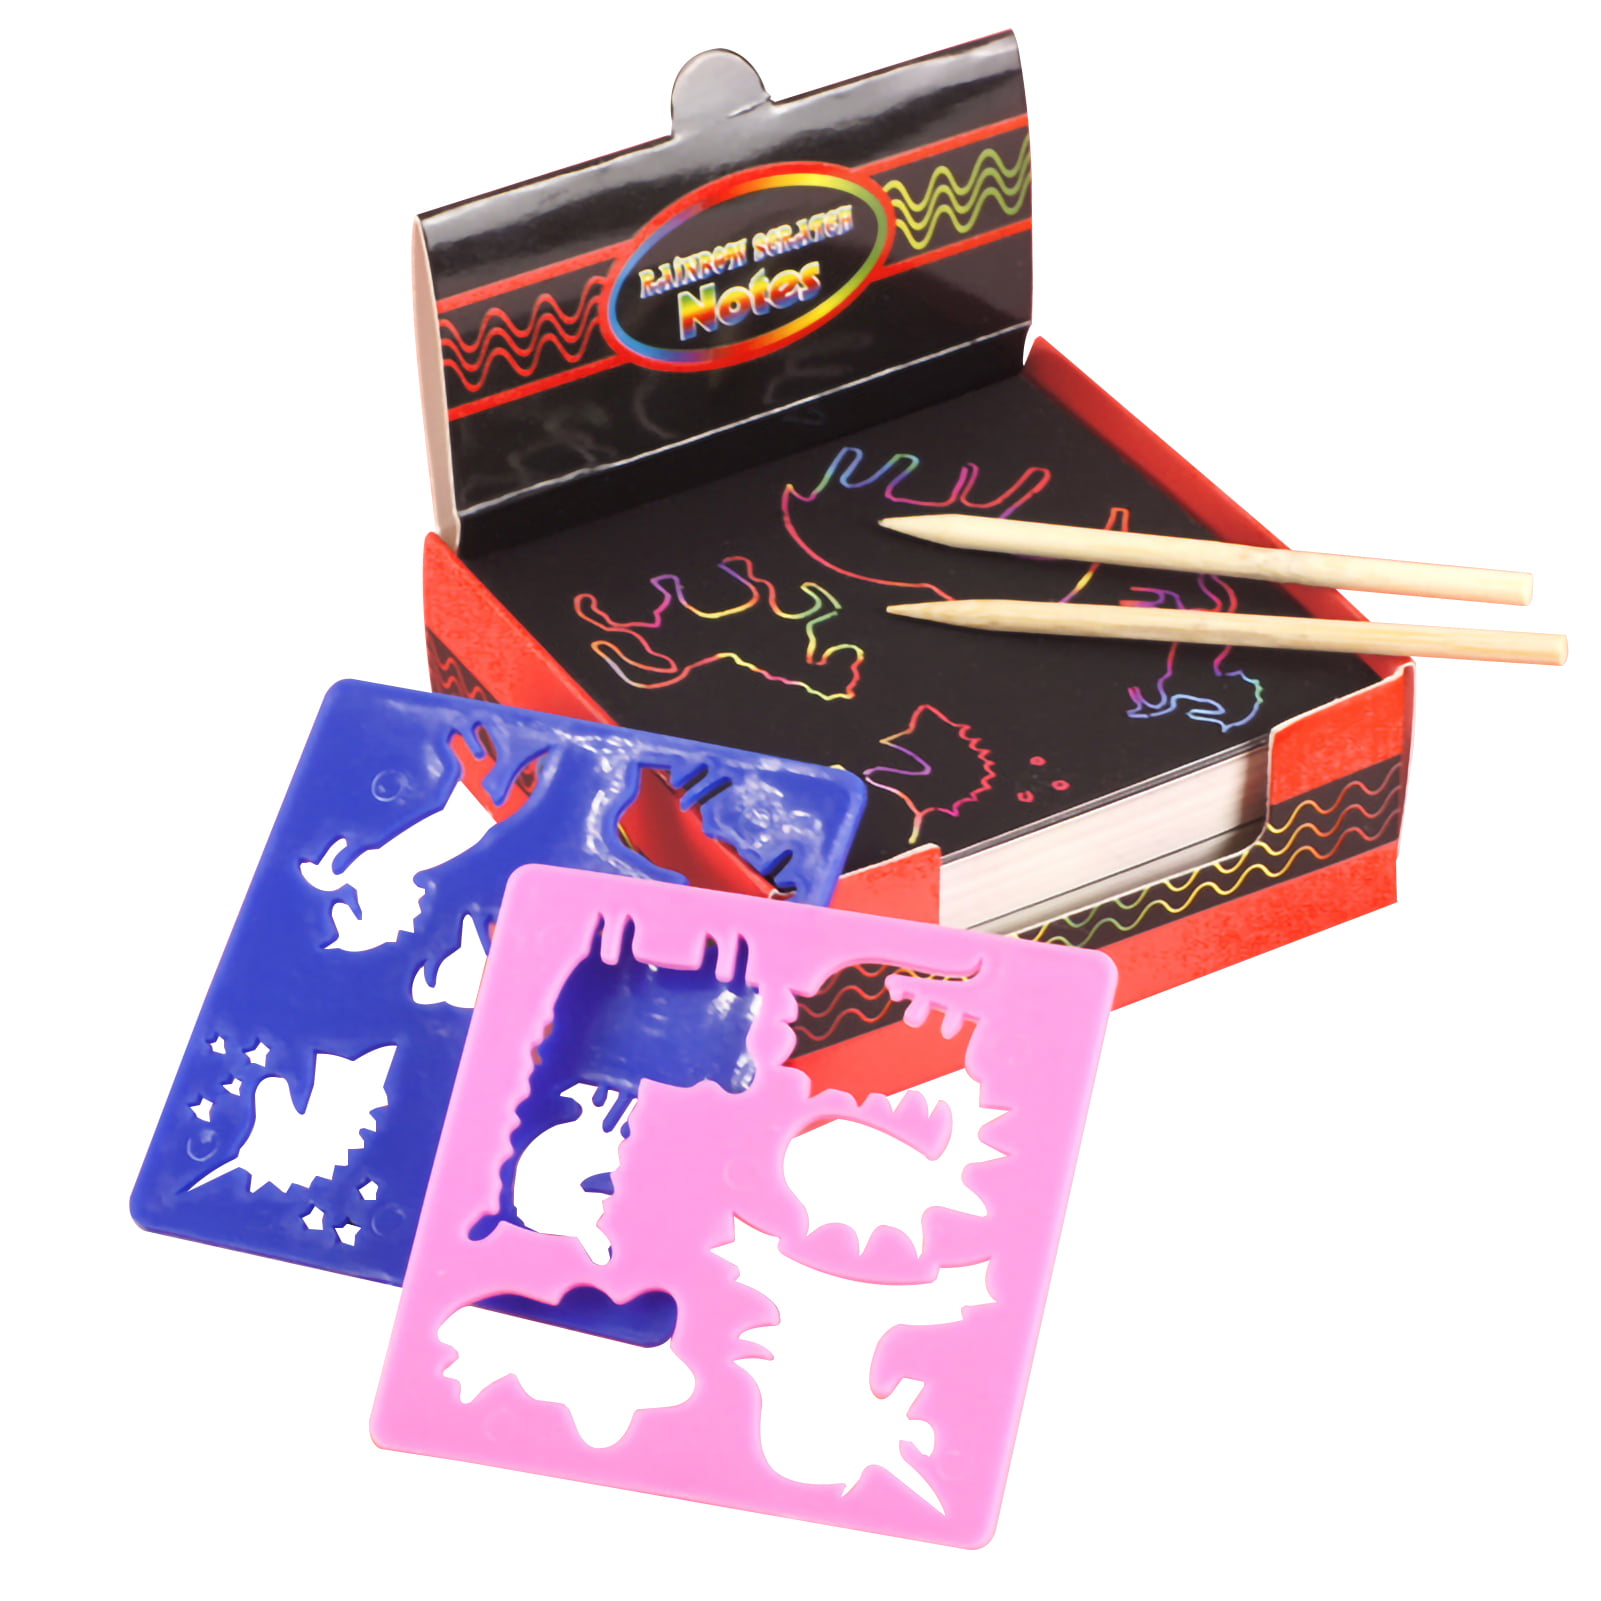 100pcs Scratch Art Set,Rainbow Scratch Paper Art with Wooden Stylus for Kids Black Scratch Off Art Crafts 